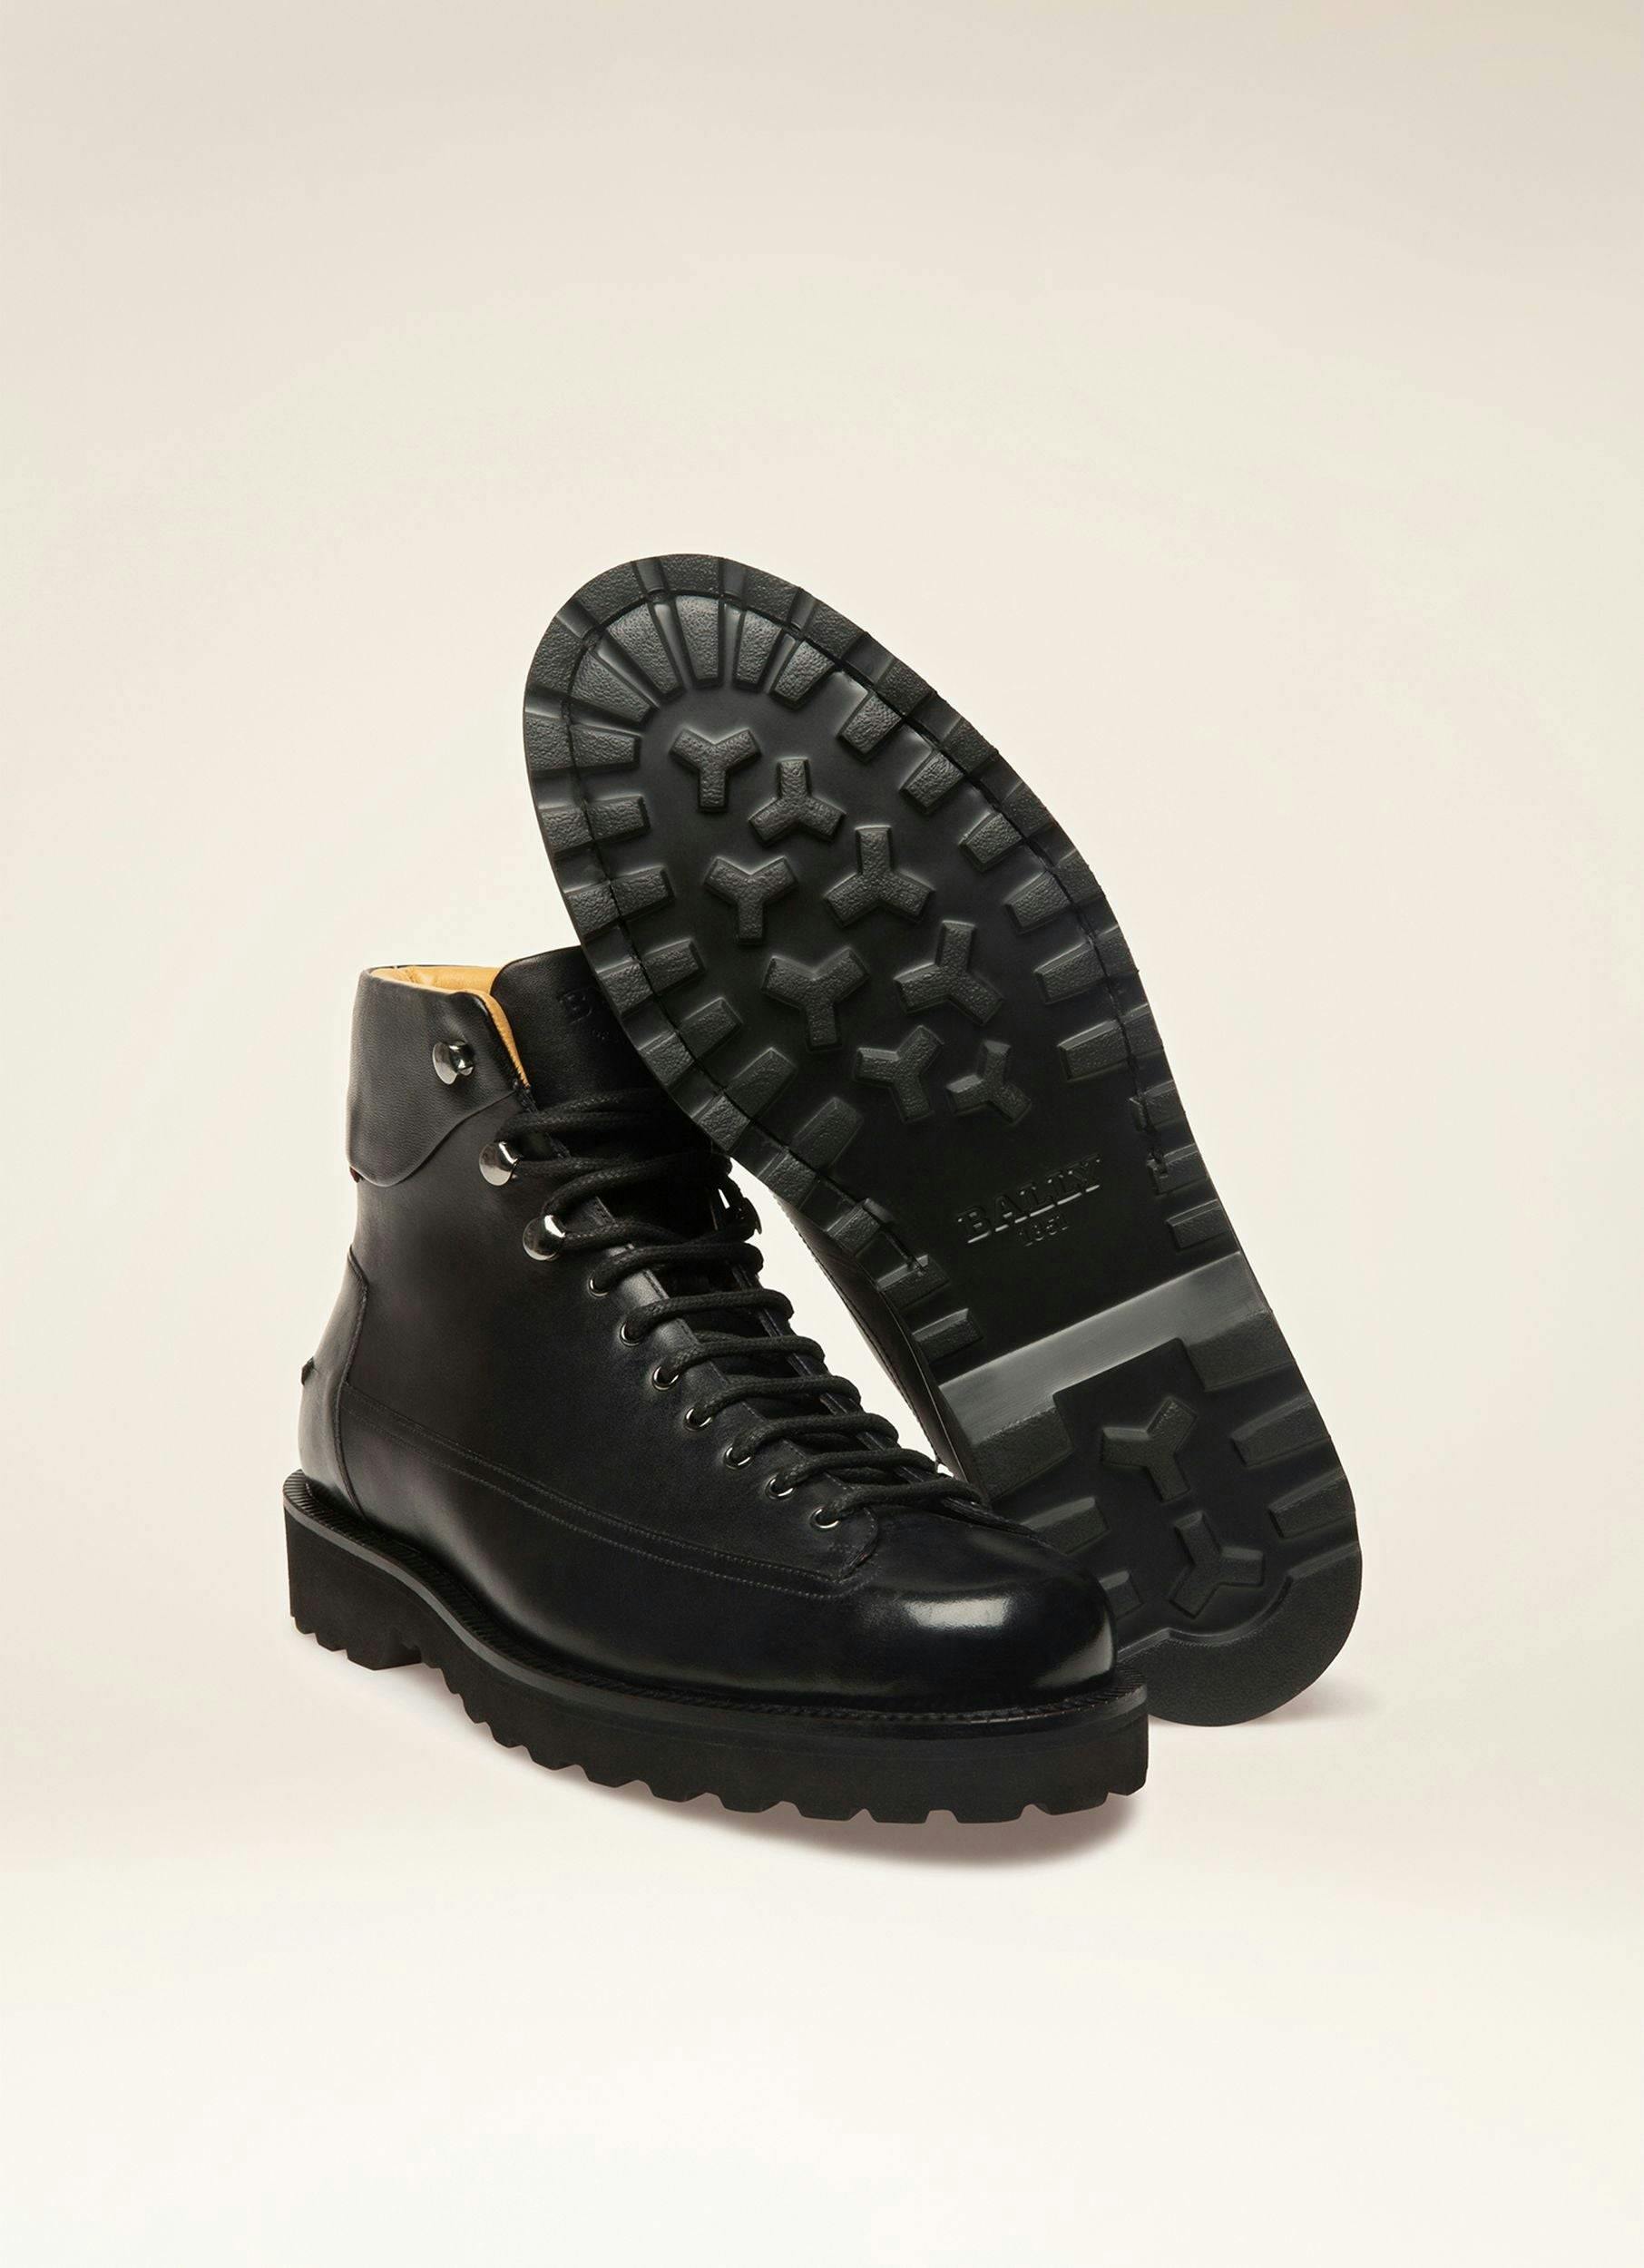 NOTTINGHAM Leather Boots In Black - Men's - Bally - 05